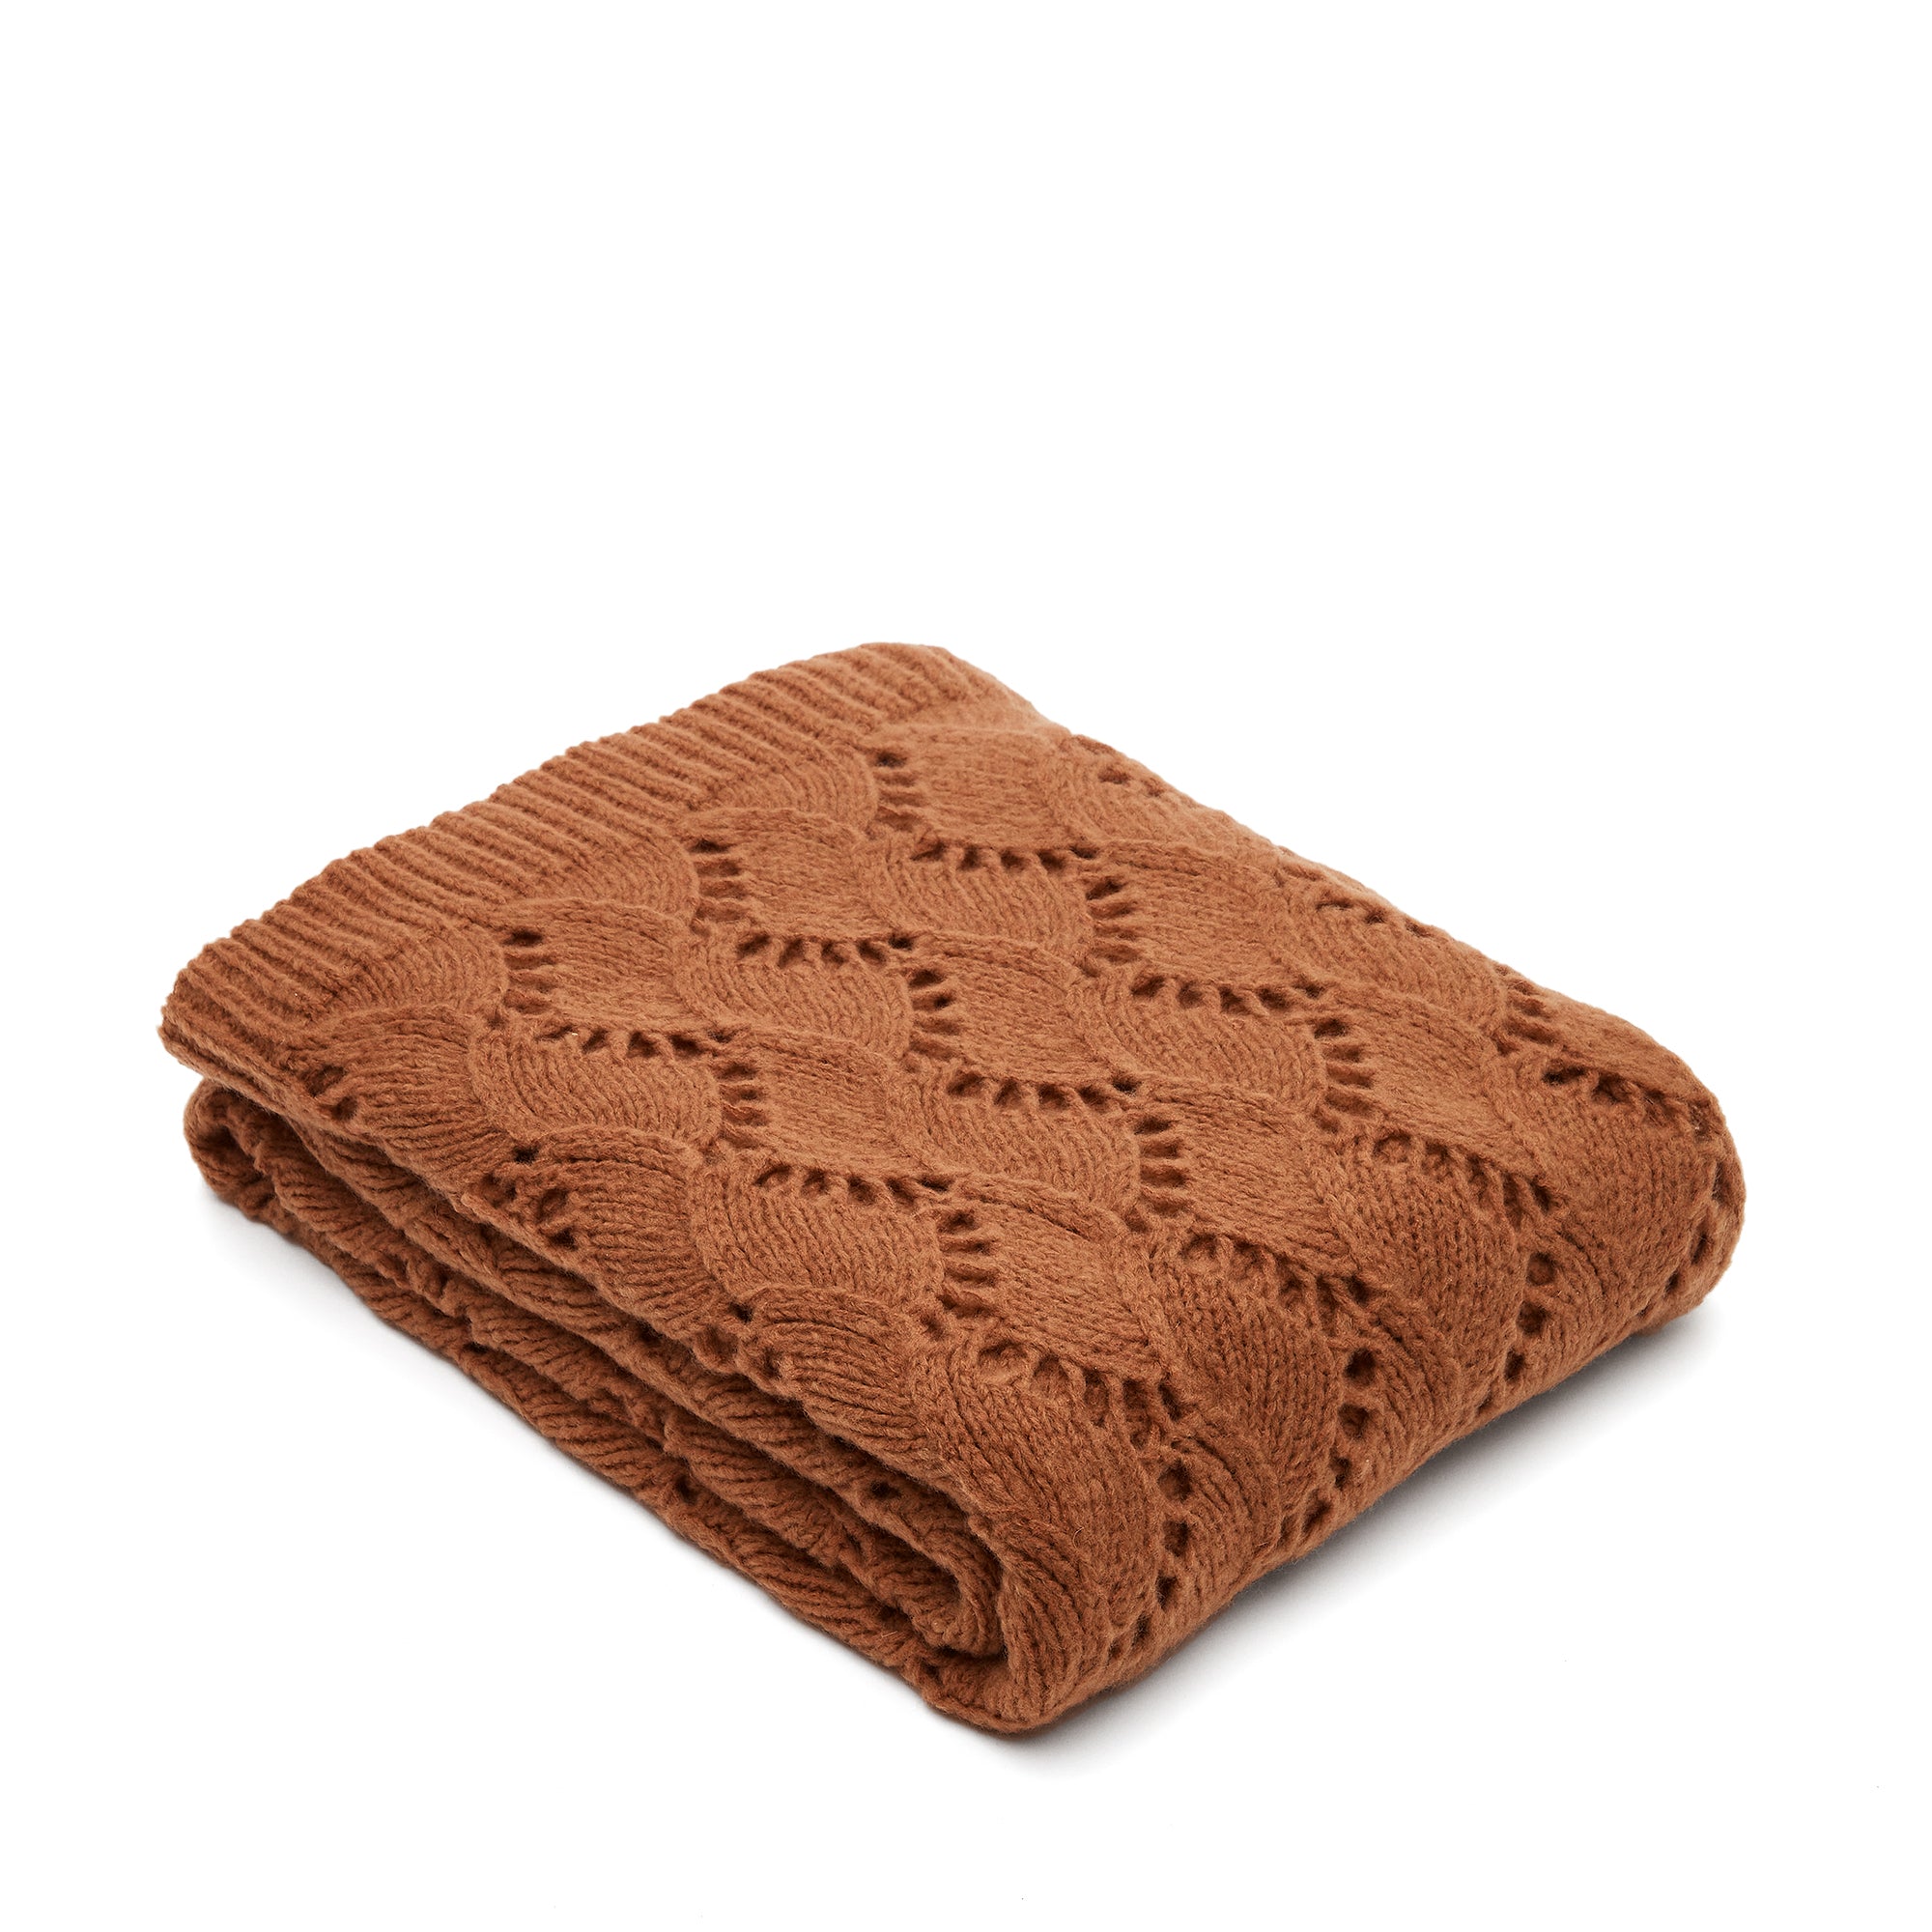 Mesias orange knitted blanket 130 x 170 cm